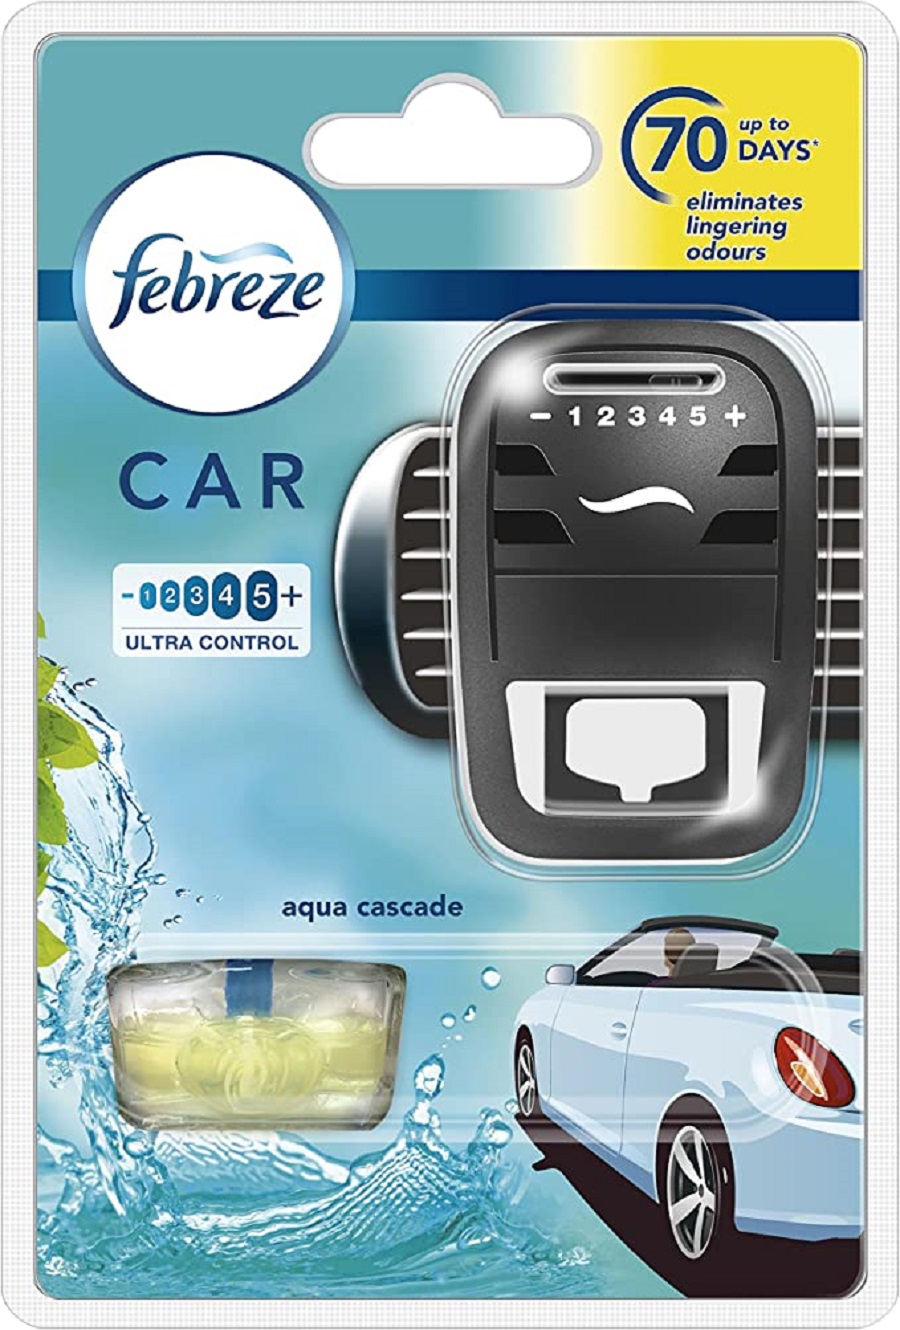 A Febreze Car air freshener in its packaging.